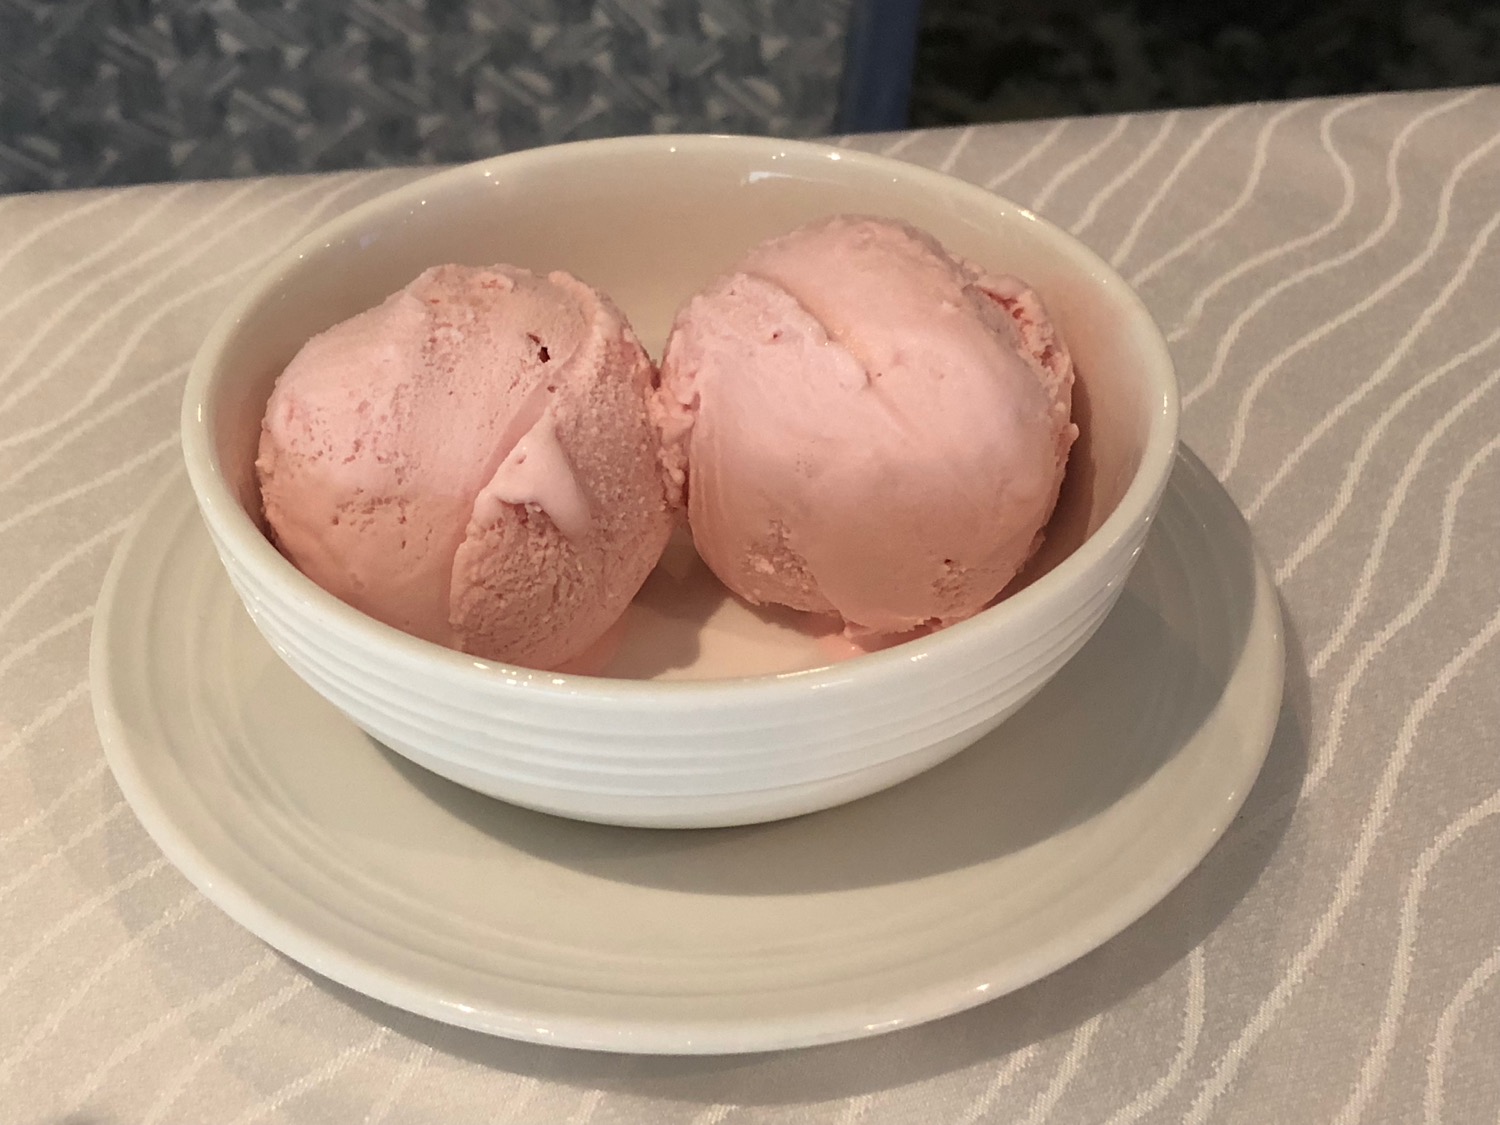 a bowl of ice cream